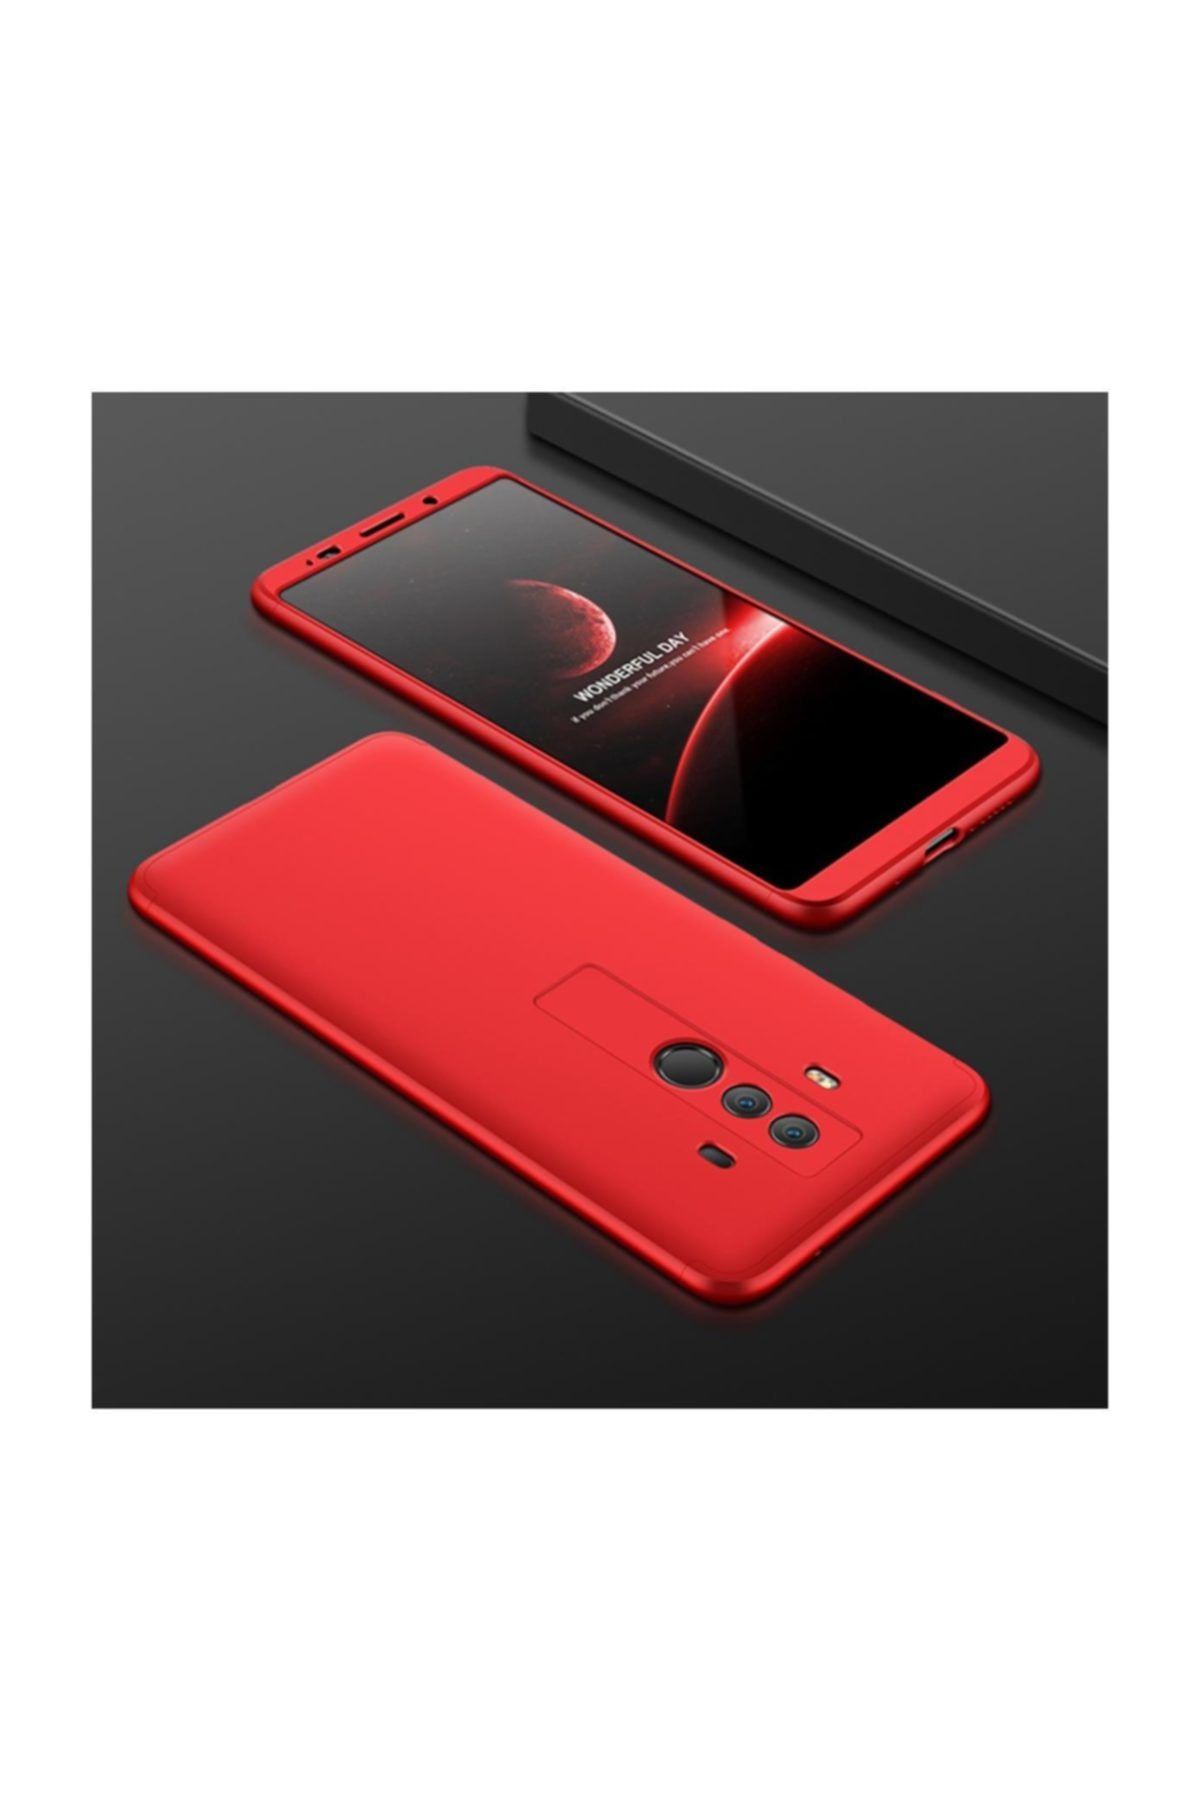 Dara Aksesuar Huawei Mate 10 Pro New 360 Derece Tam Koruma Kılıf Kırmızı